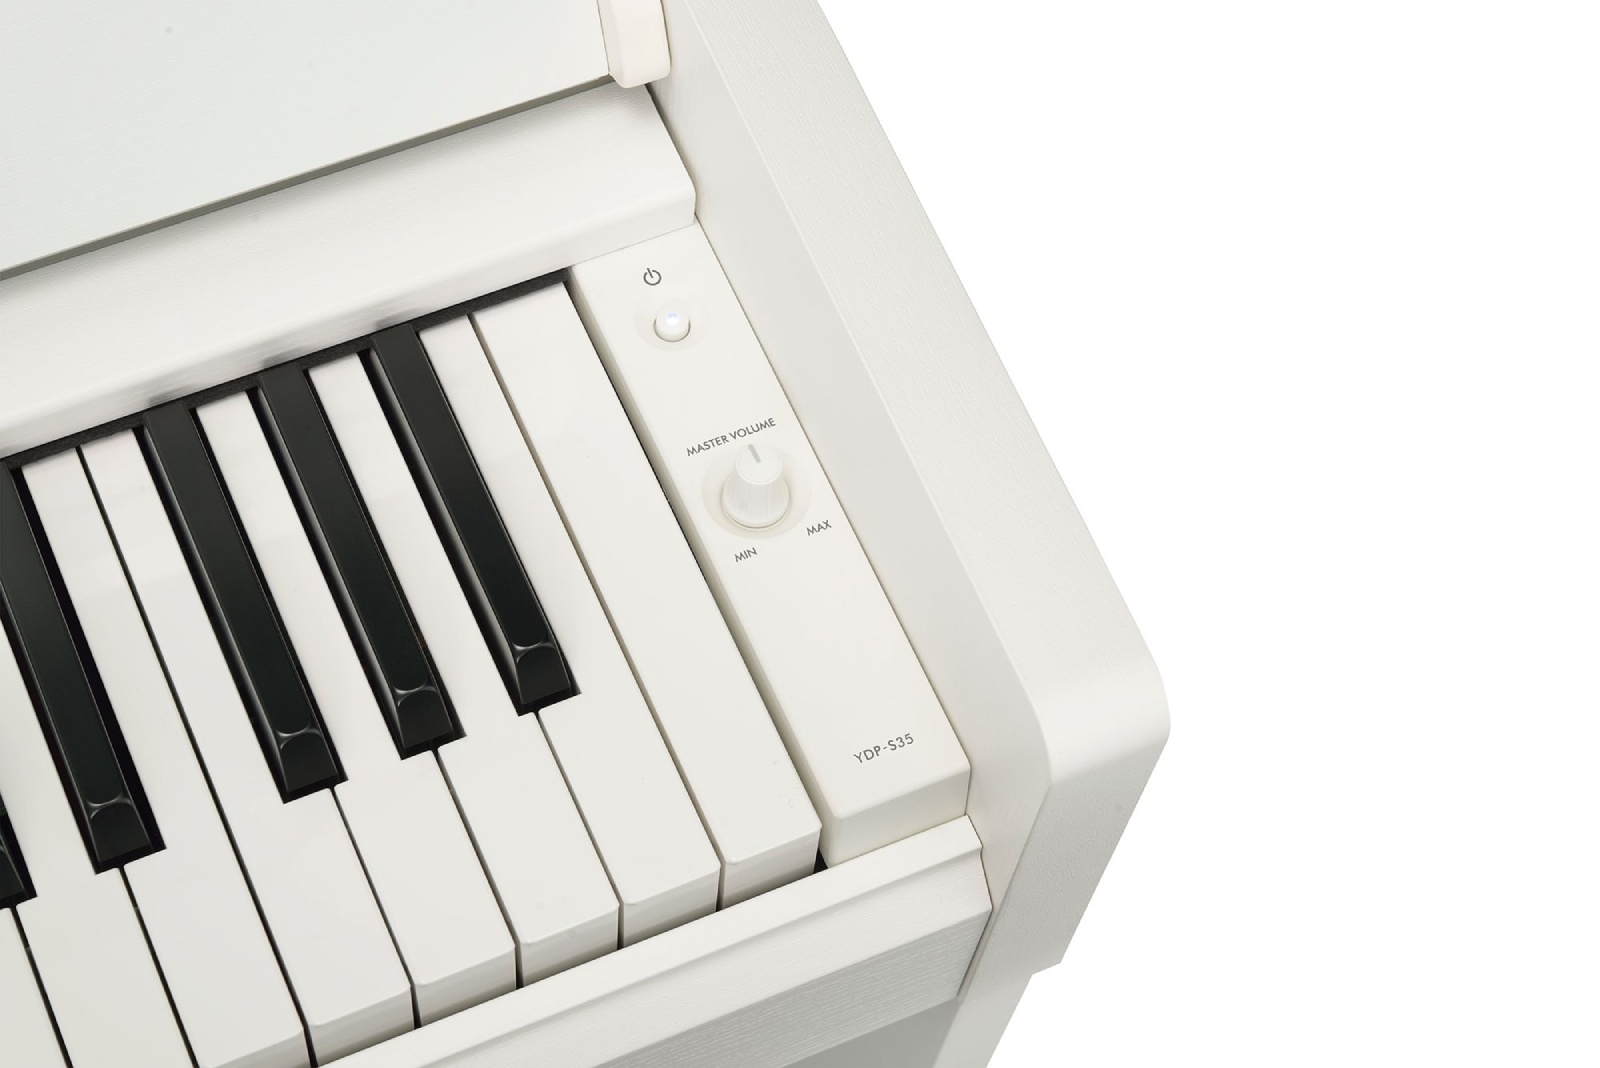 Yamaha Ydp-s35 Wh - Digitalpiano mit Stand - Variation 4